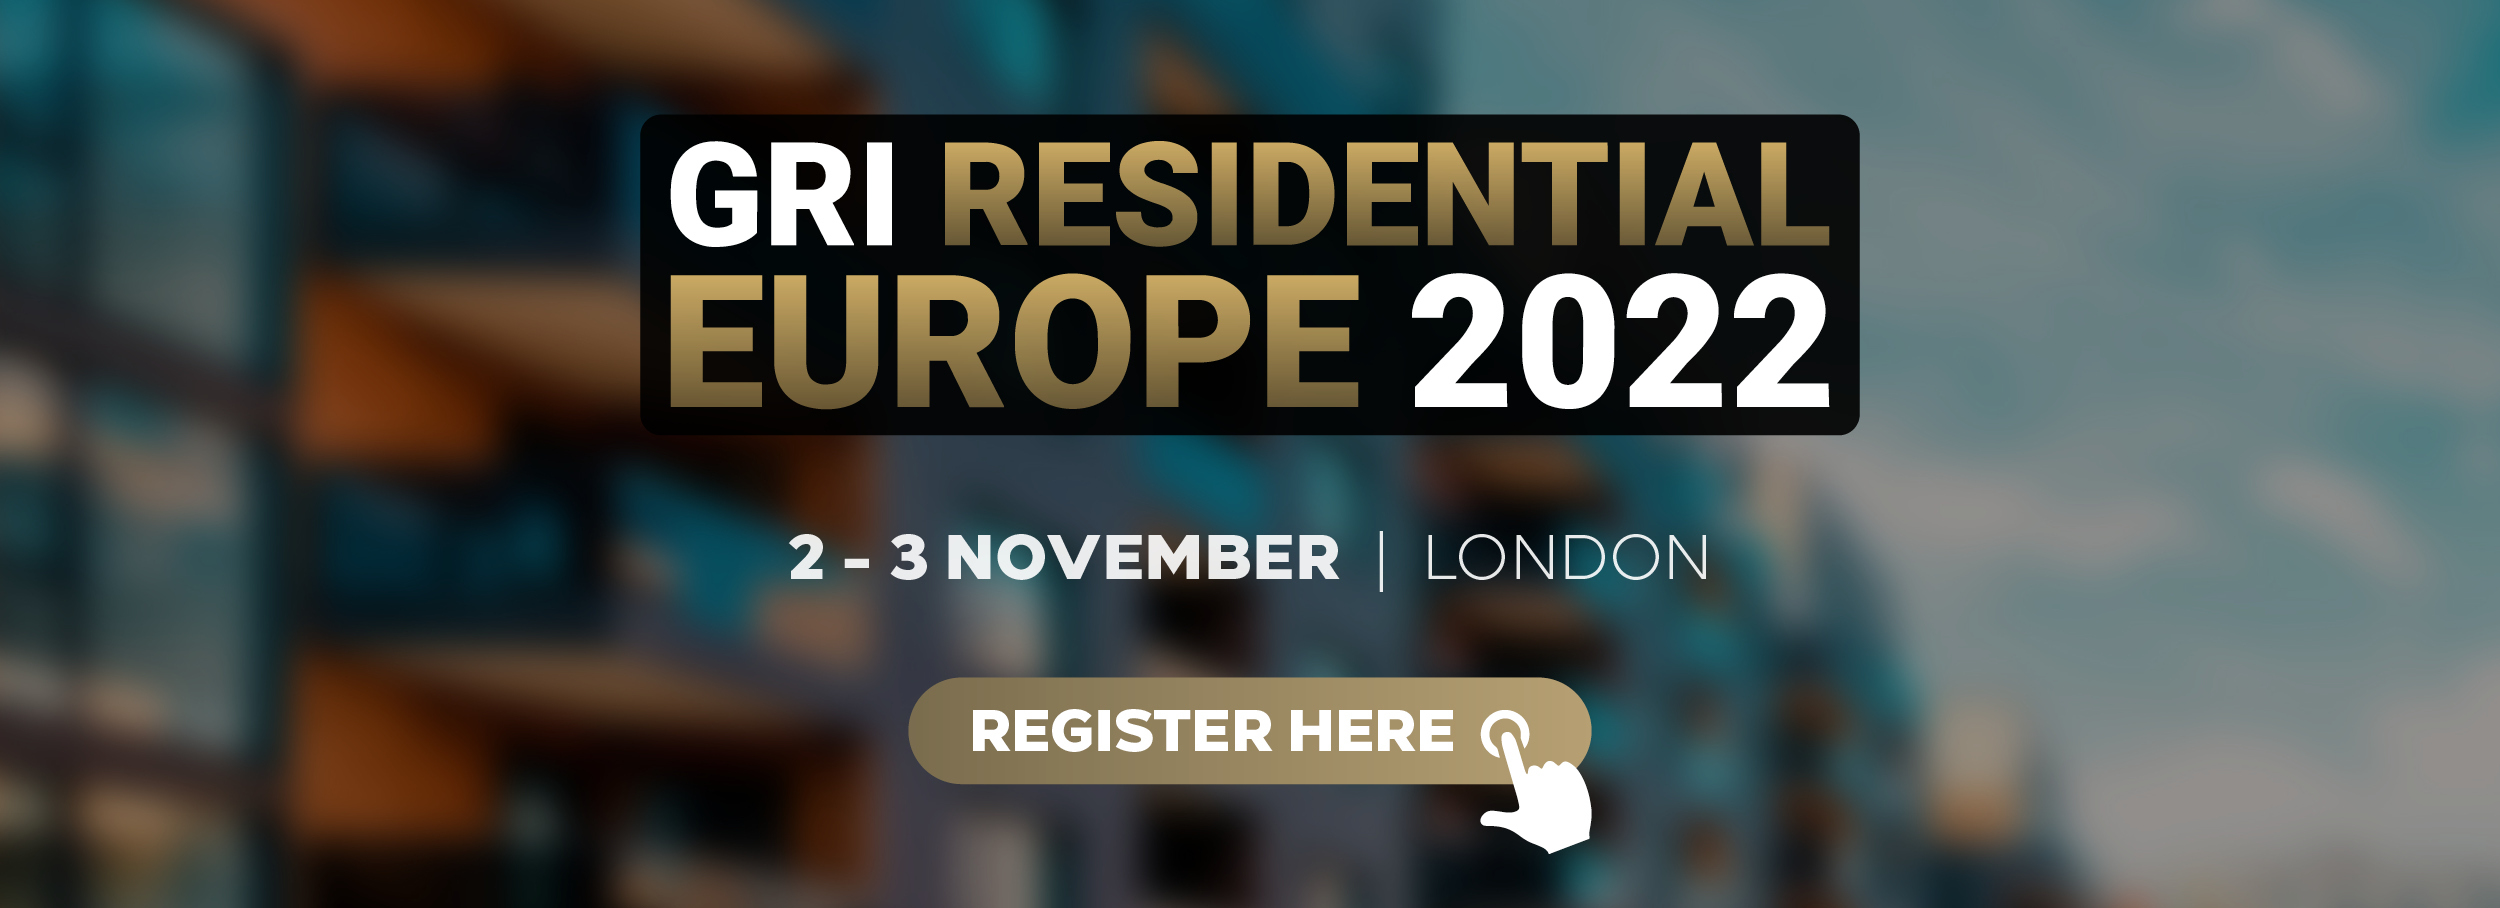 GRI Residential Europe 2022